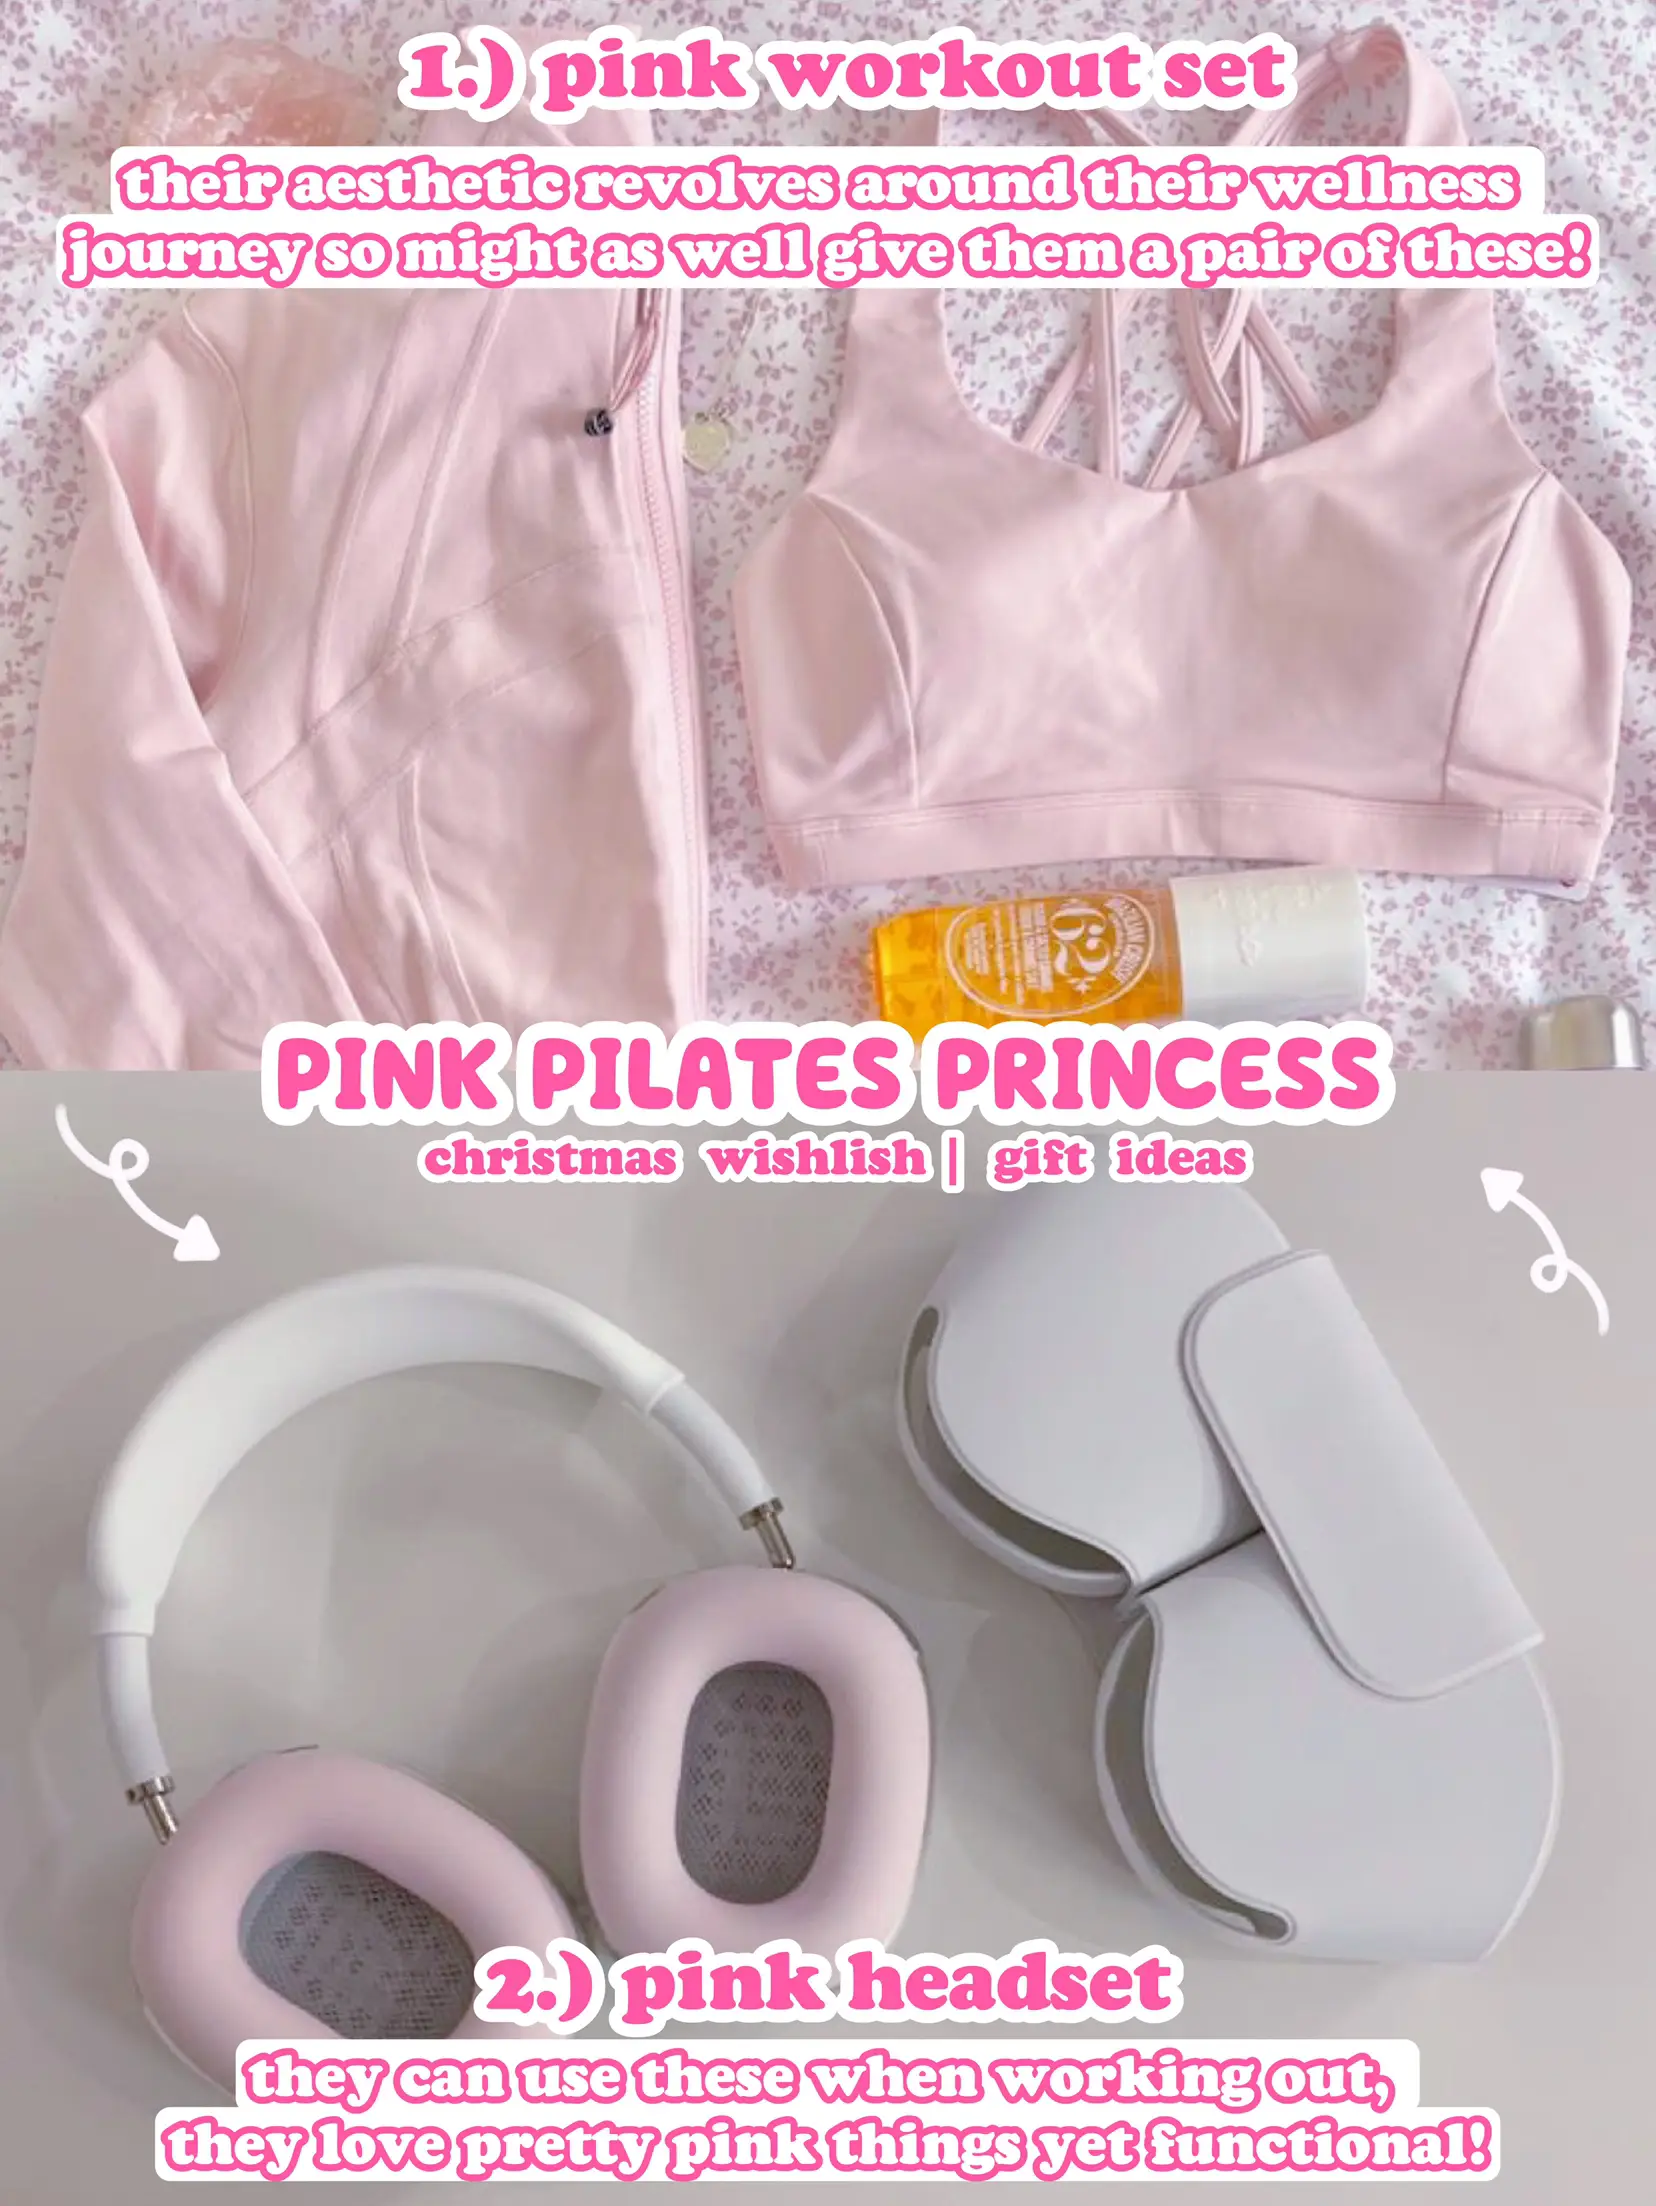 Christmas gift ideas for pink Pilates princess pt.3